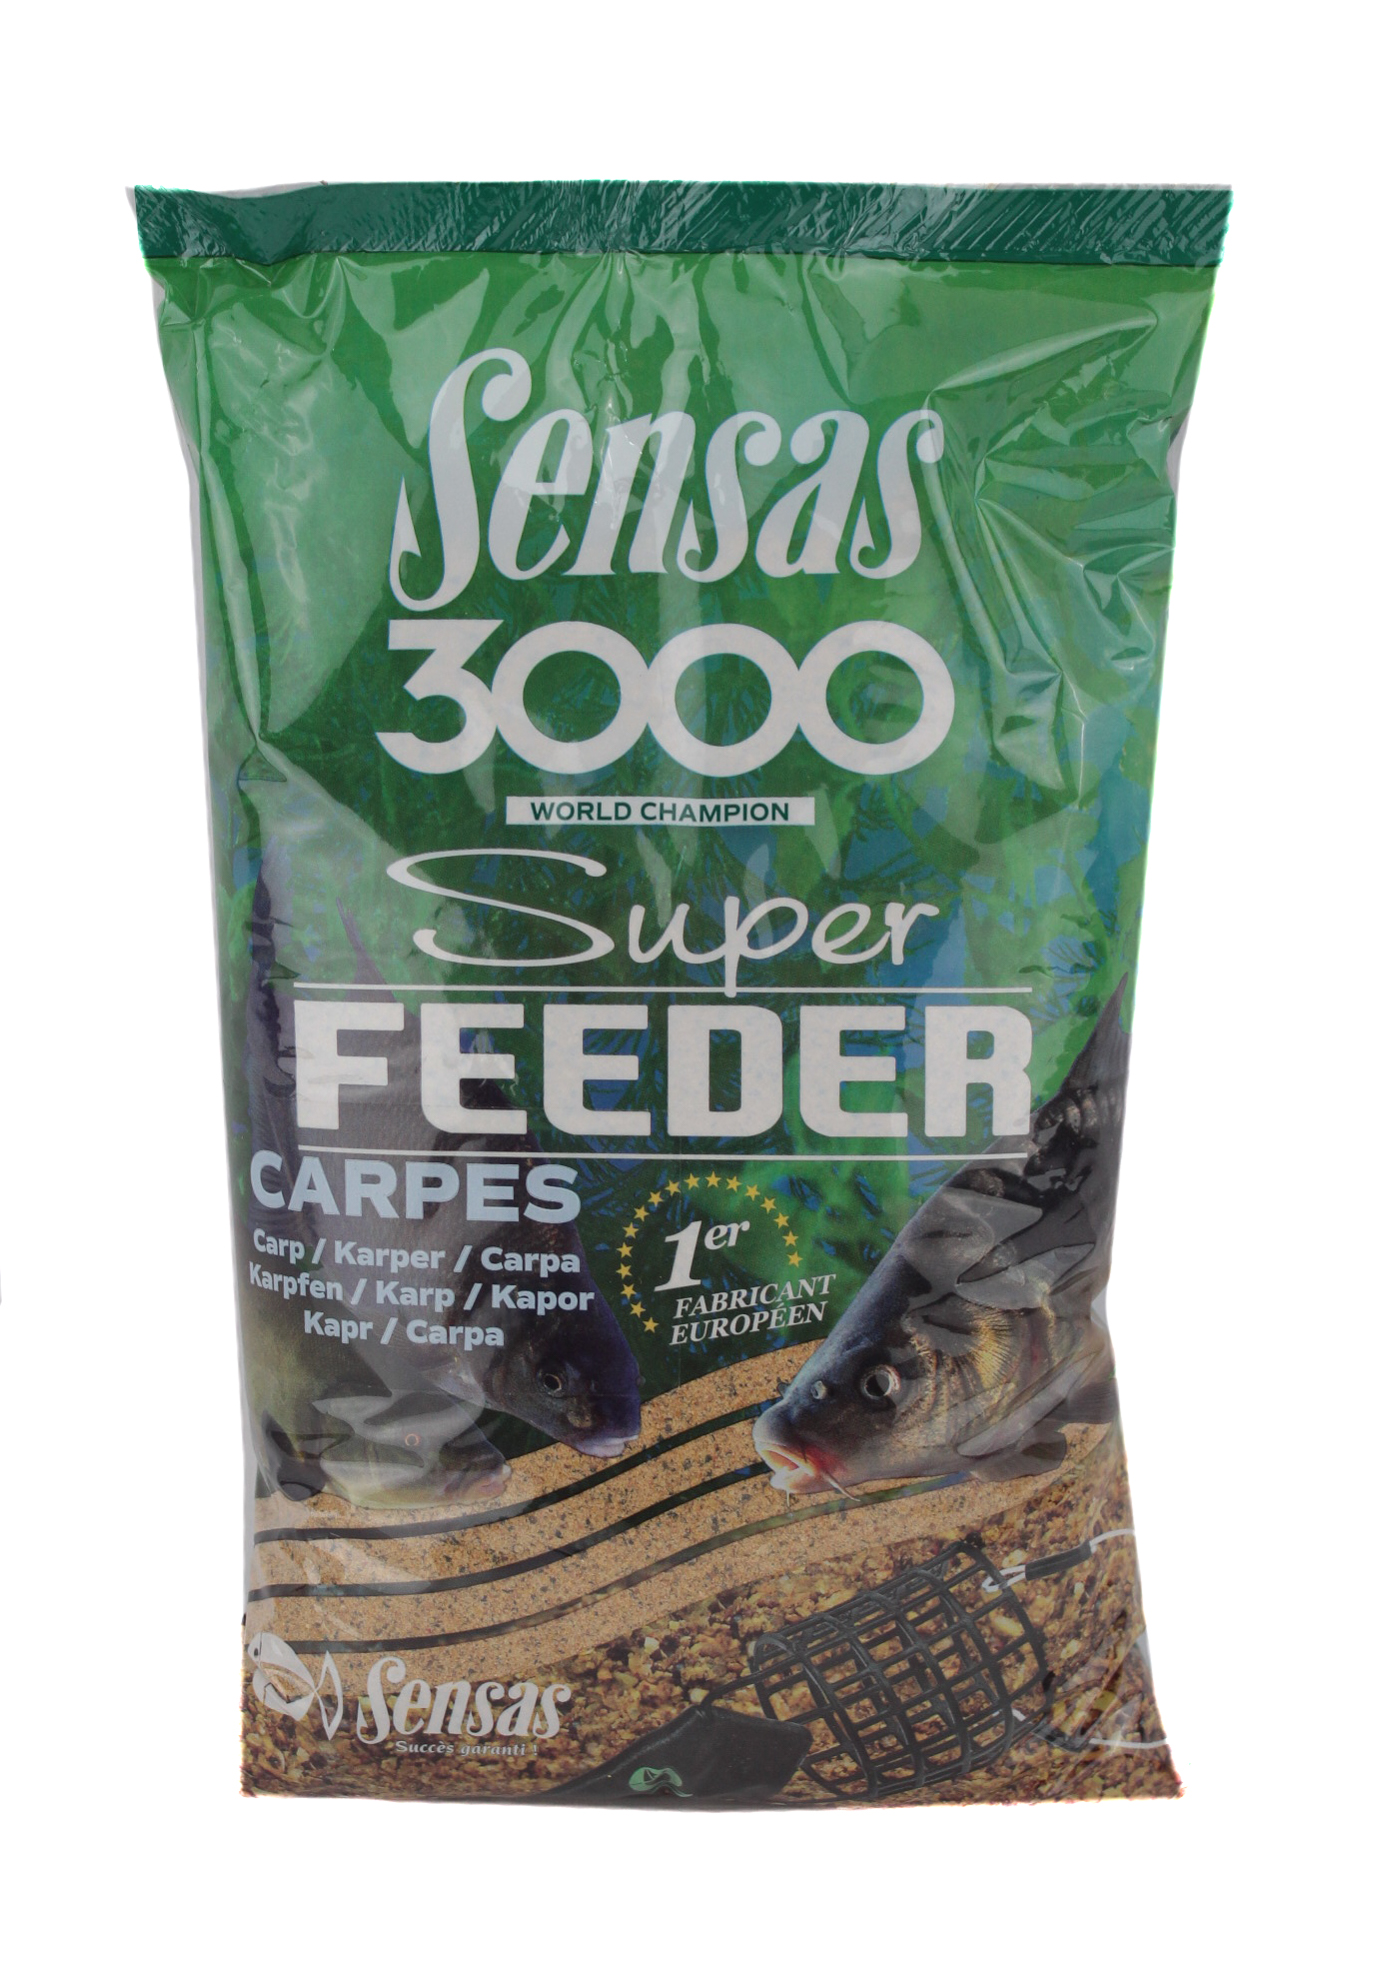 Прикормка Sensas 3000 1кг Super feeder carp 